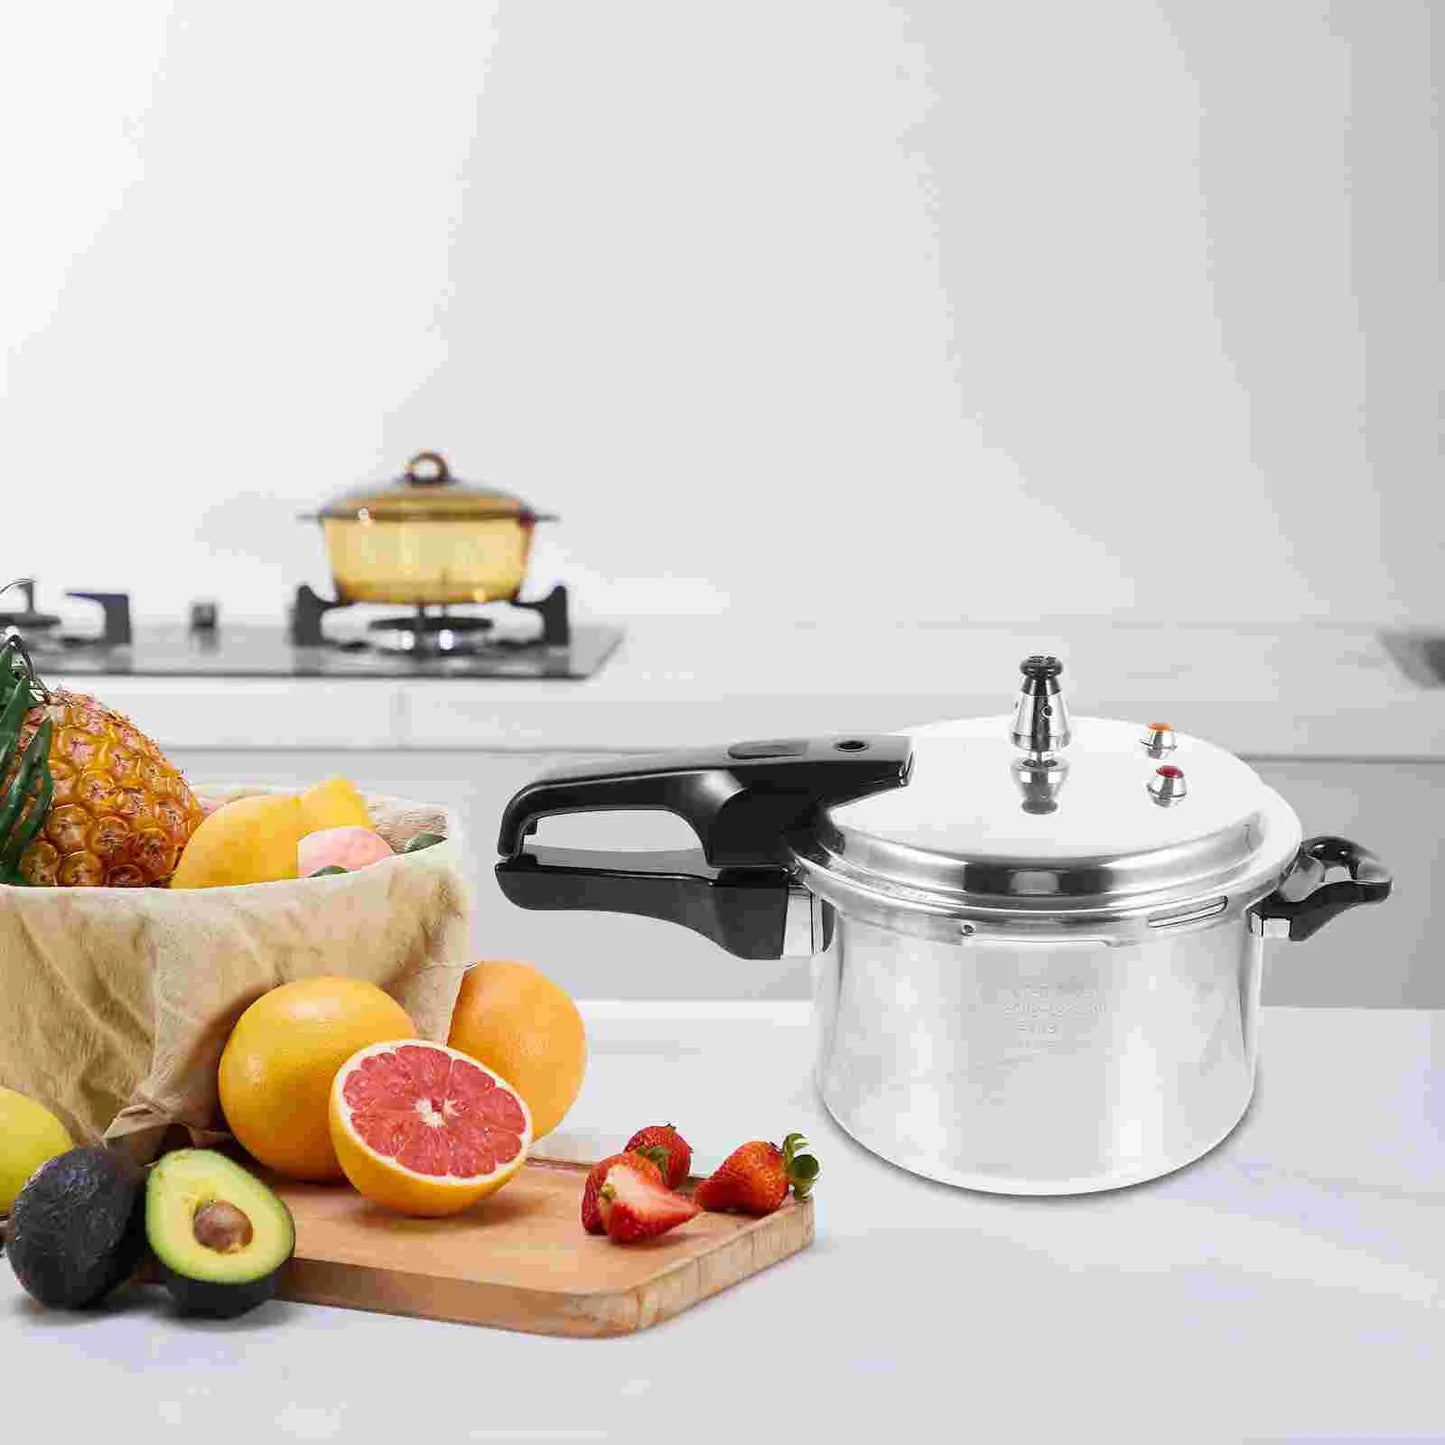 Pressure Cooker
Gas Cooker
Household Pressure Cooker
Stainless Steel Cookware
Restaurant Safe Food Grade